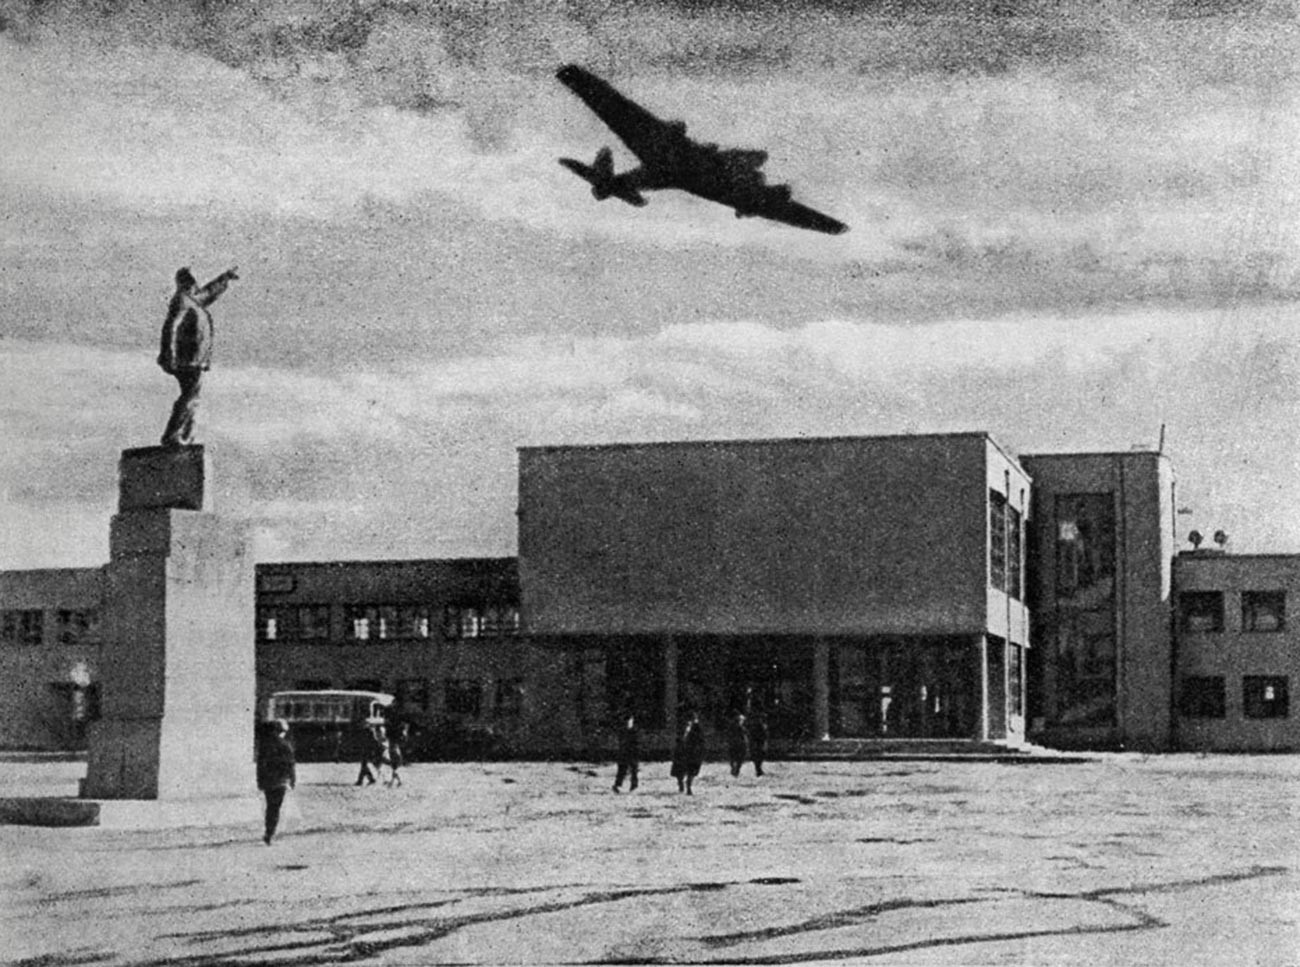 ANT-14 di Bandara Khodynskoe Pole, 1934.